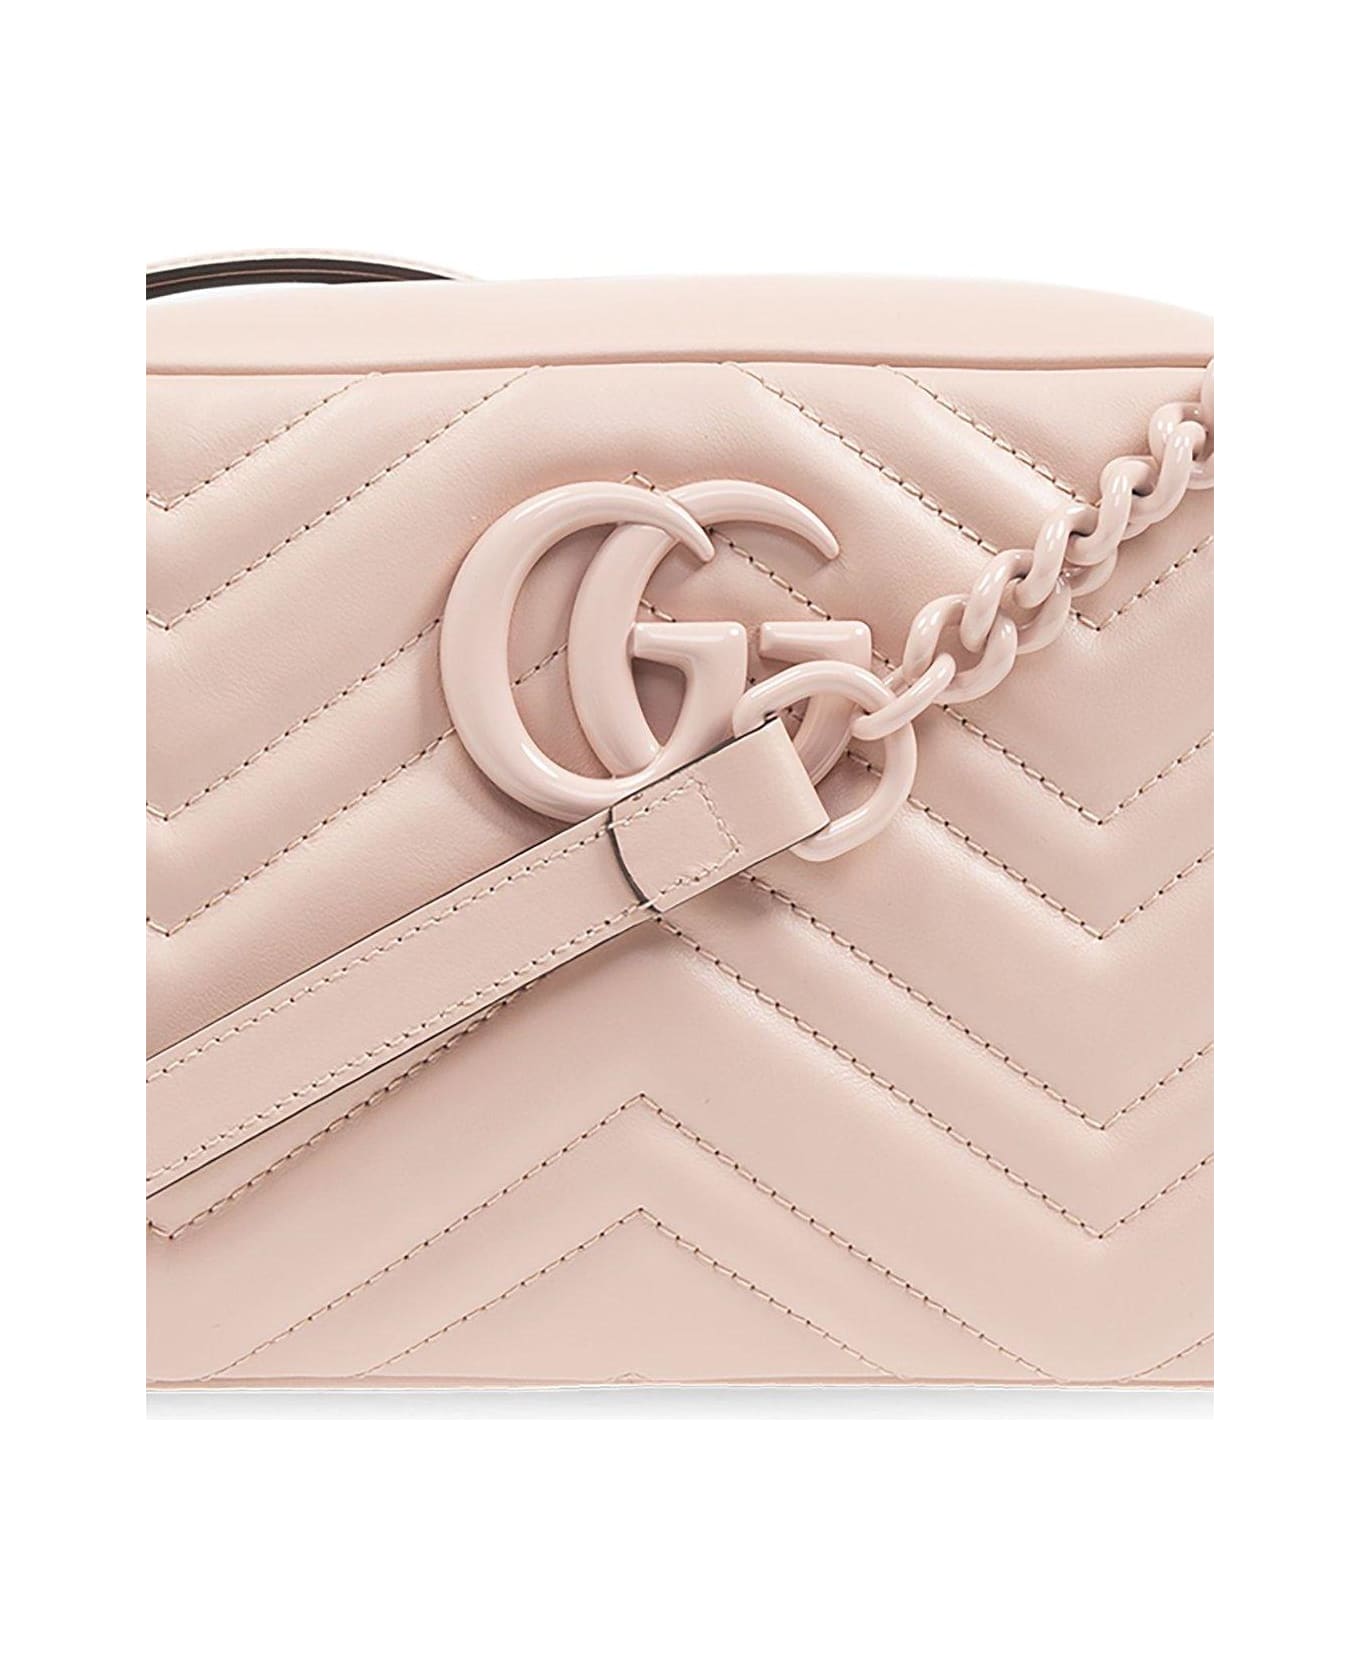 Gucci Gg Marmont Matelass Mall Shoulder Bag - Perfect Pink ショルダーバッグ